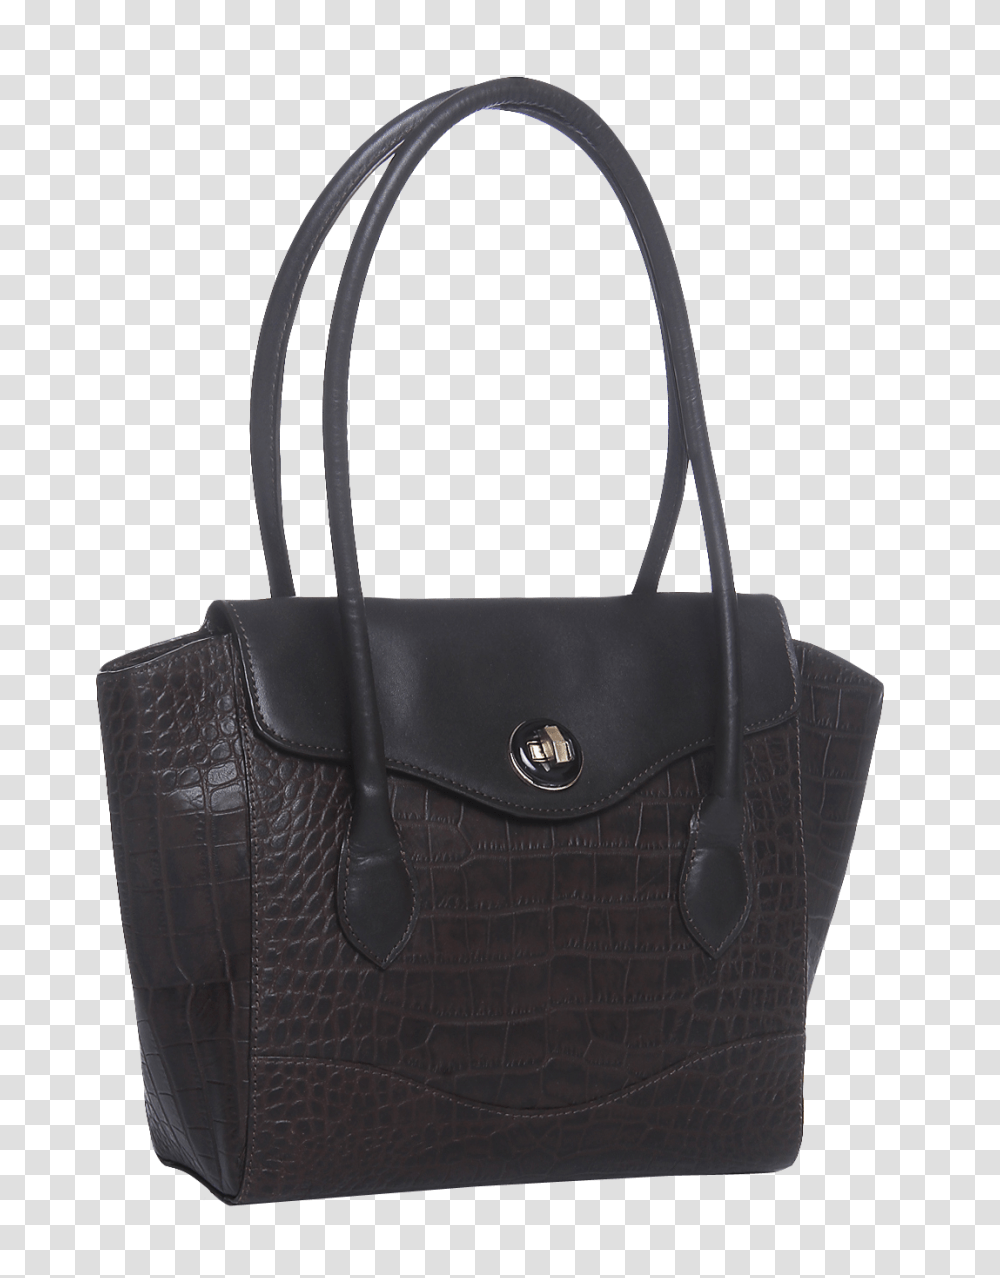 Leather Handbag Image, Accessories, Accessory, Purse, Tote Bag Transparent Png